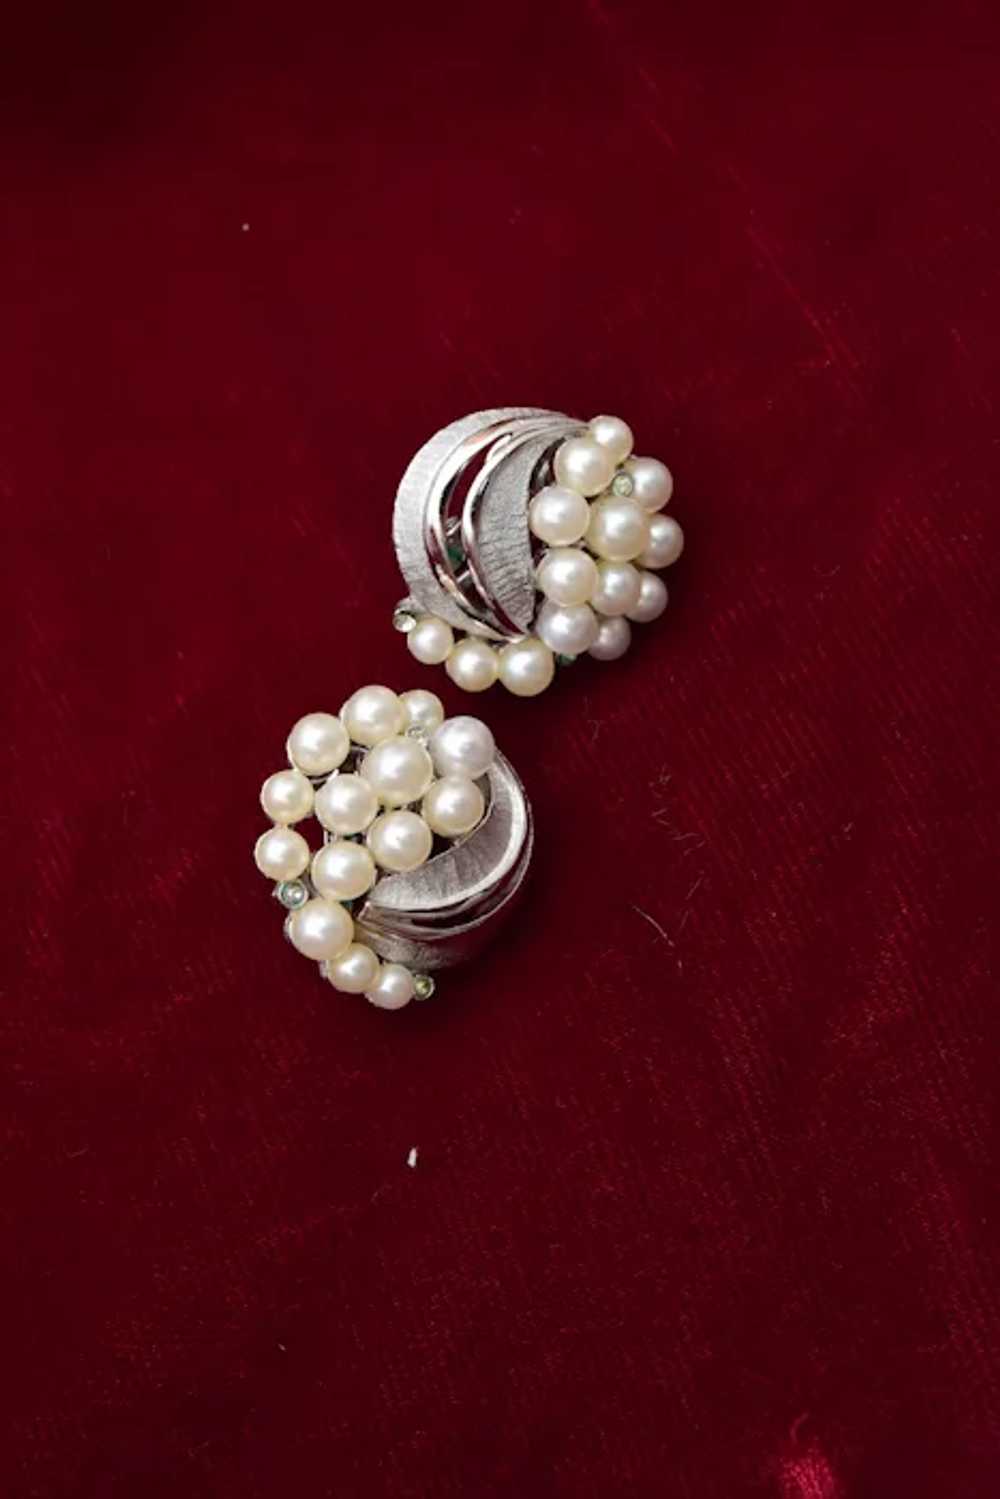 Crown Trifari Silver Tone and Faux Pearl Earrings - image 2